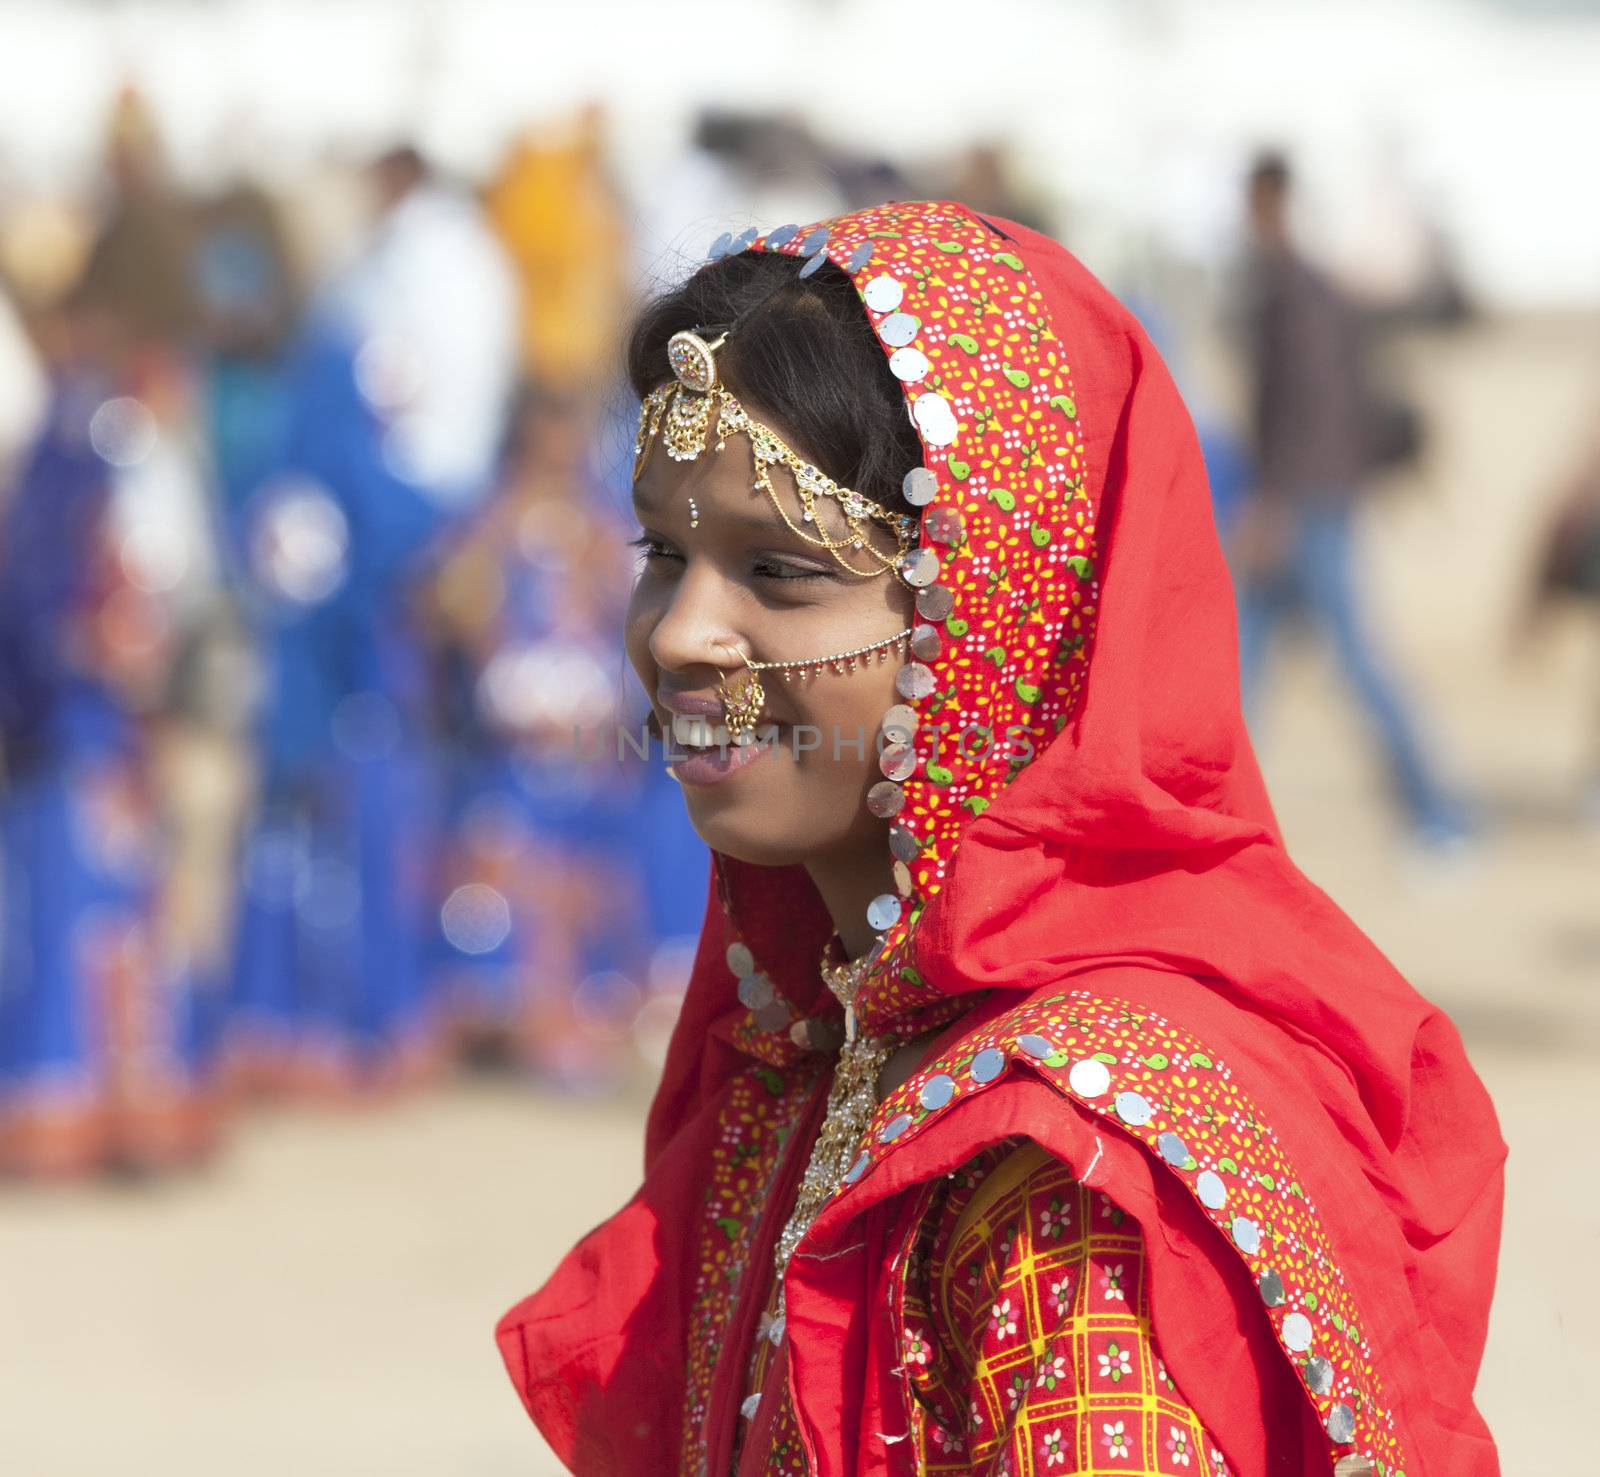 PUSHKAR, INDIA - NOVEMBER 21:  An unidentified girl in colorful ethnic attire attends at the Pushkar fair on November 21, 2012 in Pushkar, Rajasthan, India.